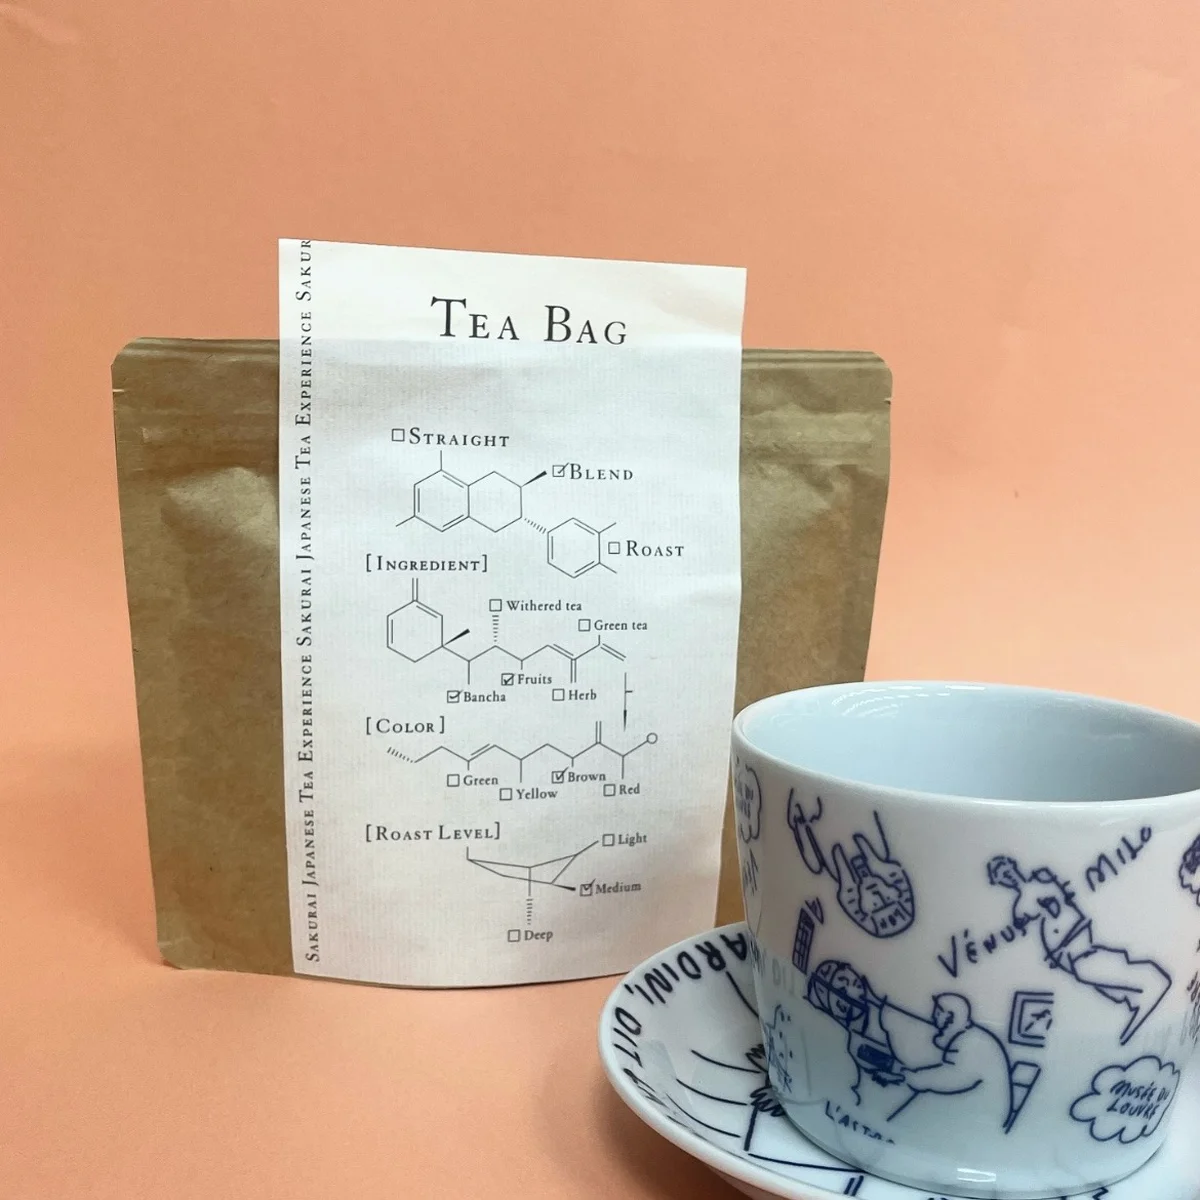 櫻井焙茶研究所 TEA BAG 柚子種焙じ茶 